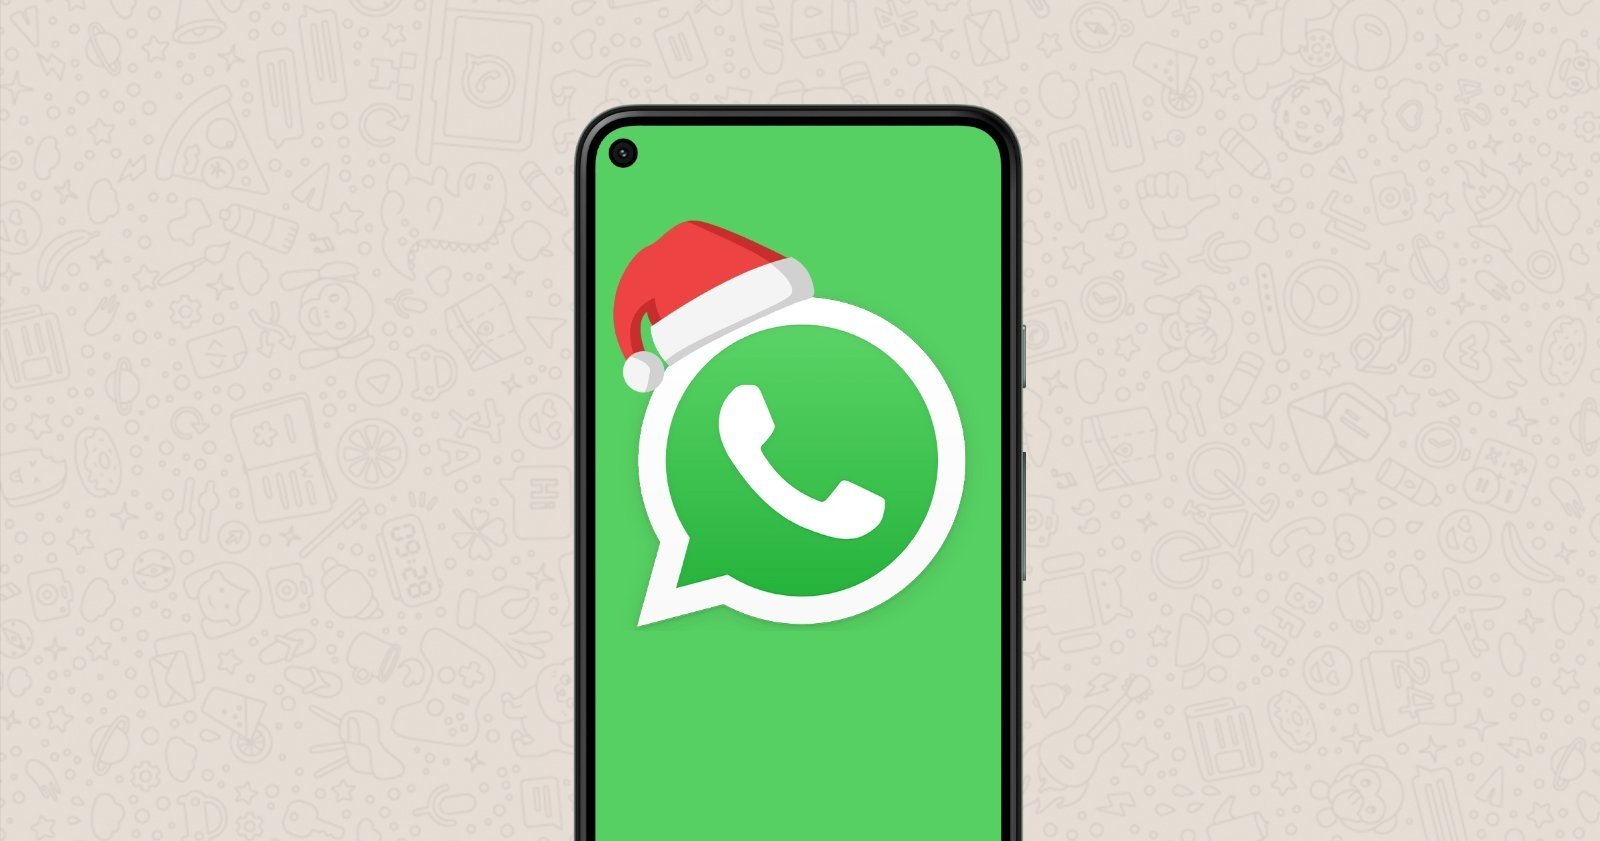 WhatsApp en Navidad